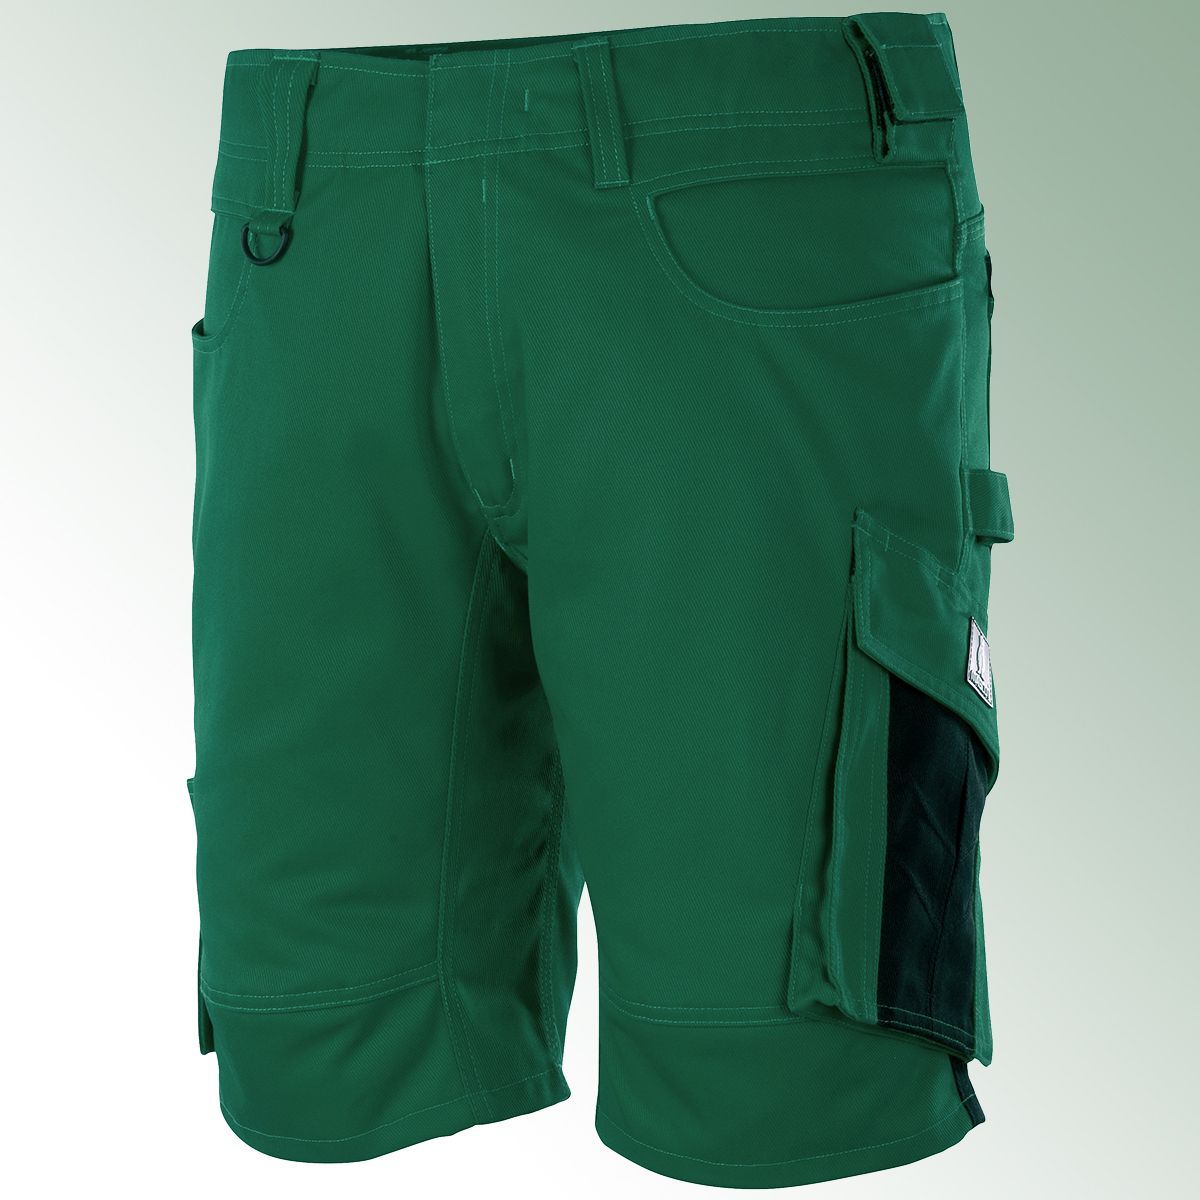 Work Shorts Stuttgart Size 54 Green / Black